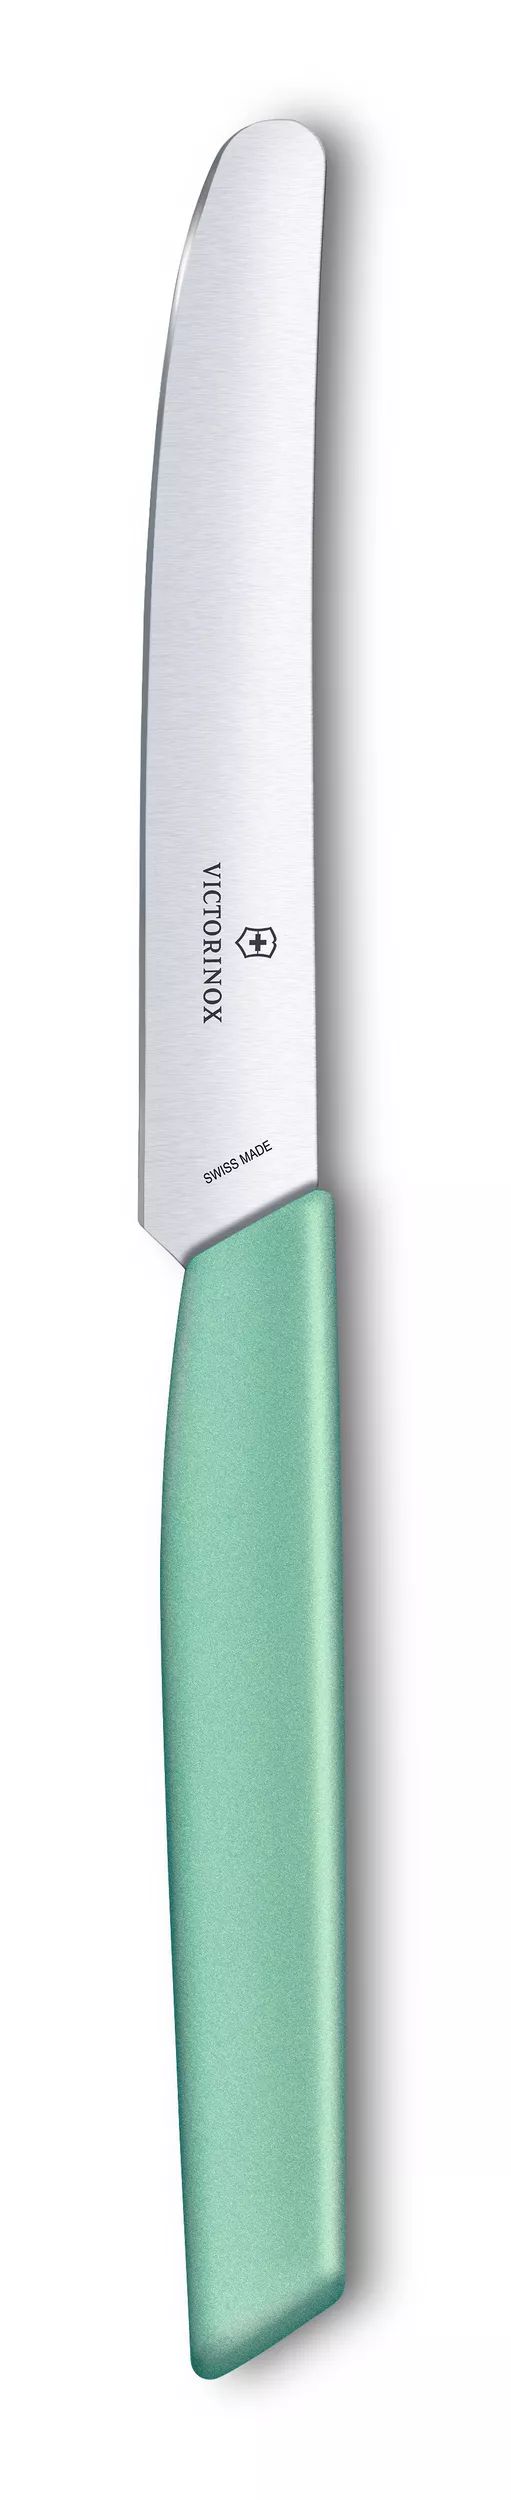 Cuchillo para tomate y de mesa Swiss Modern - 6.9006.1141